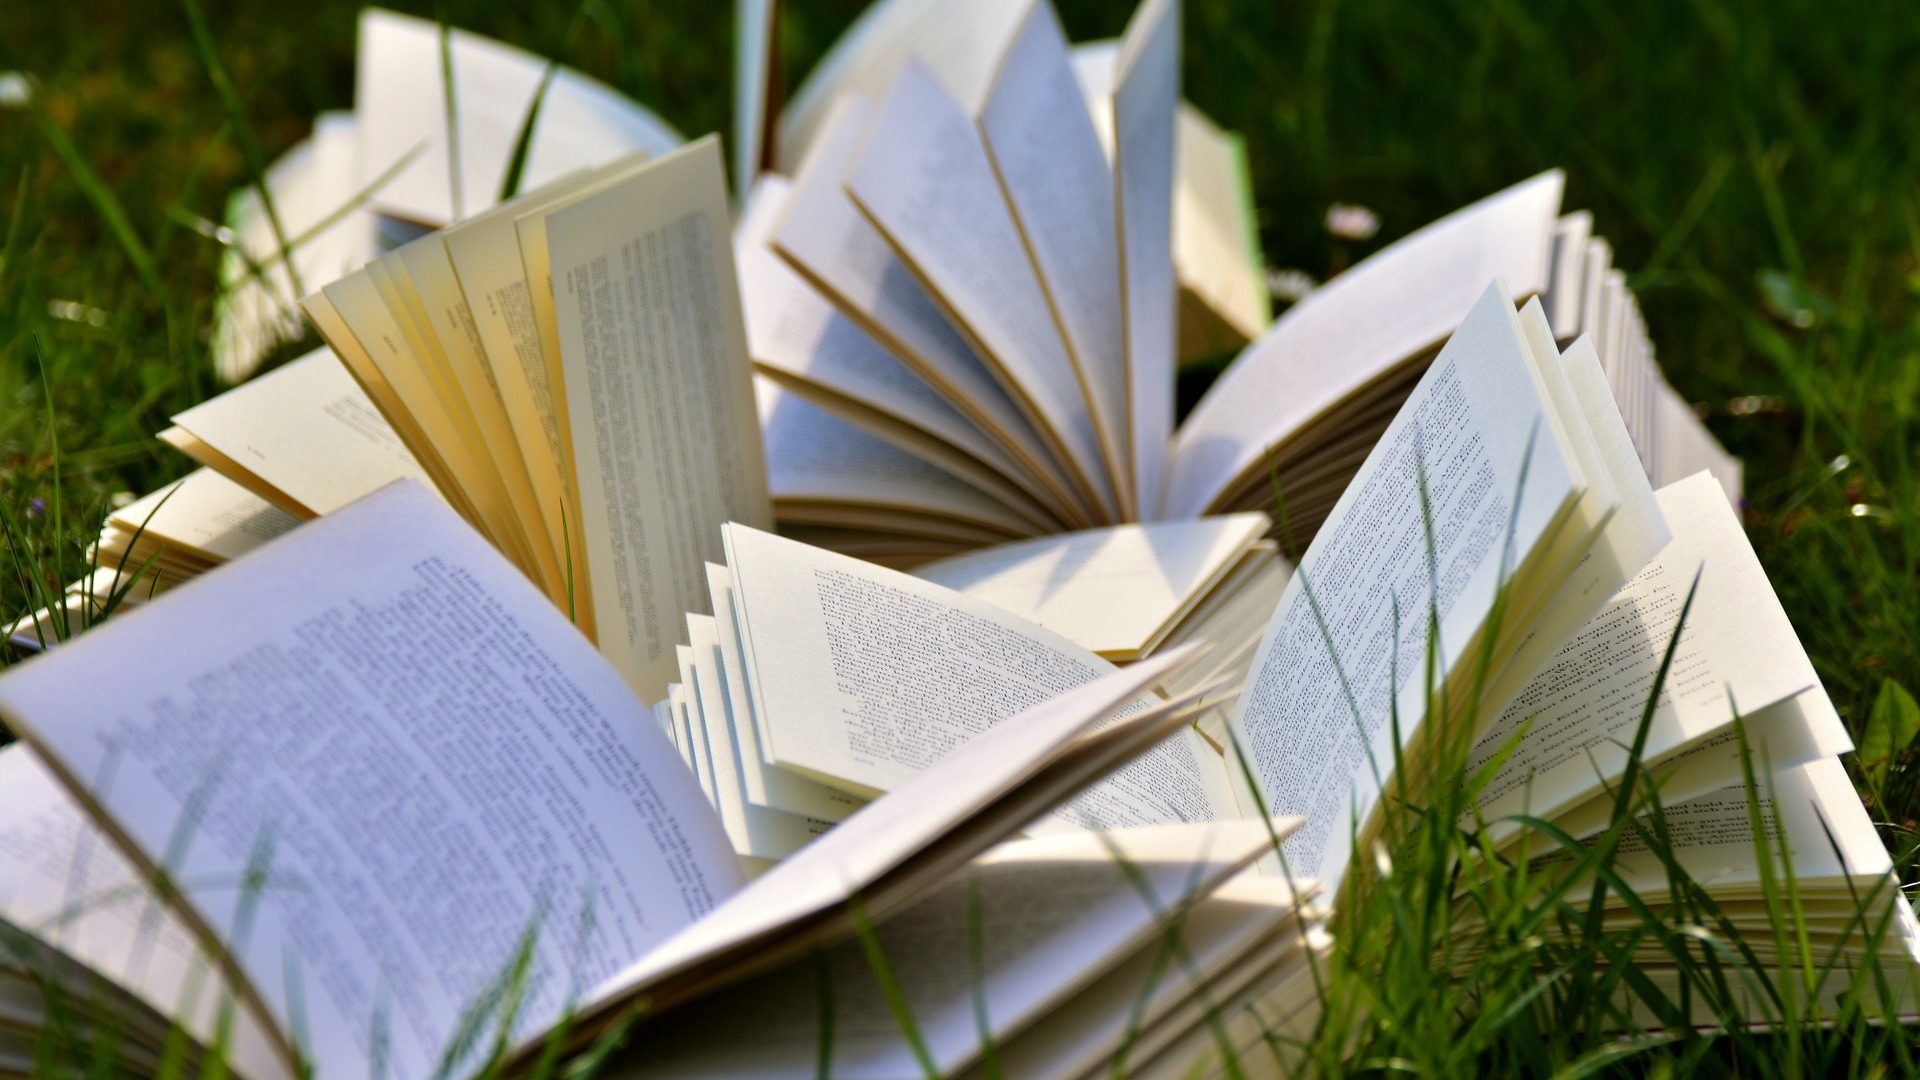 Otevřené knihy položené v trávě